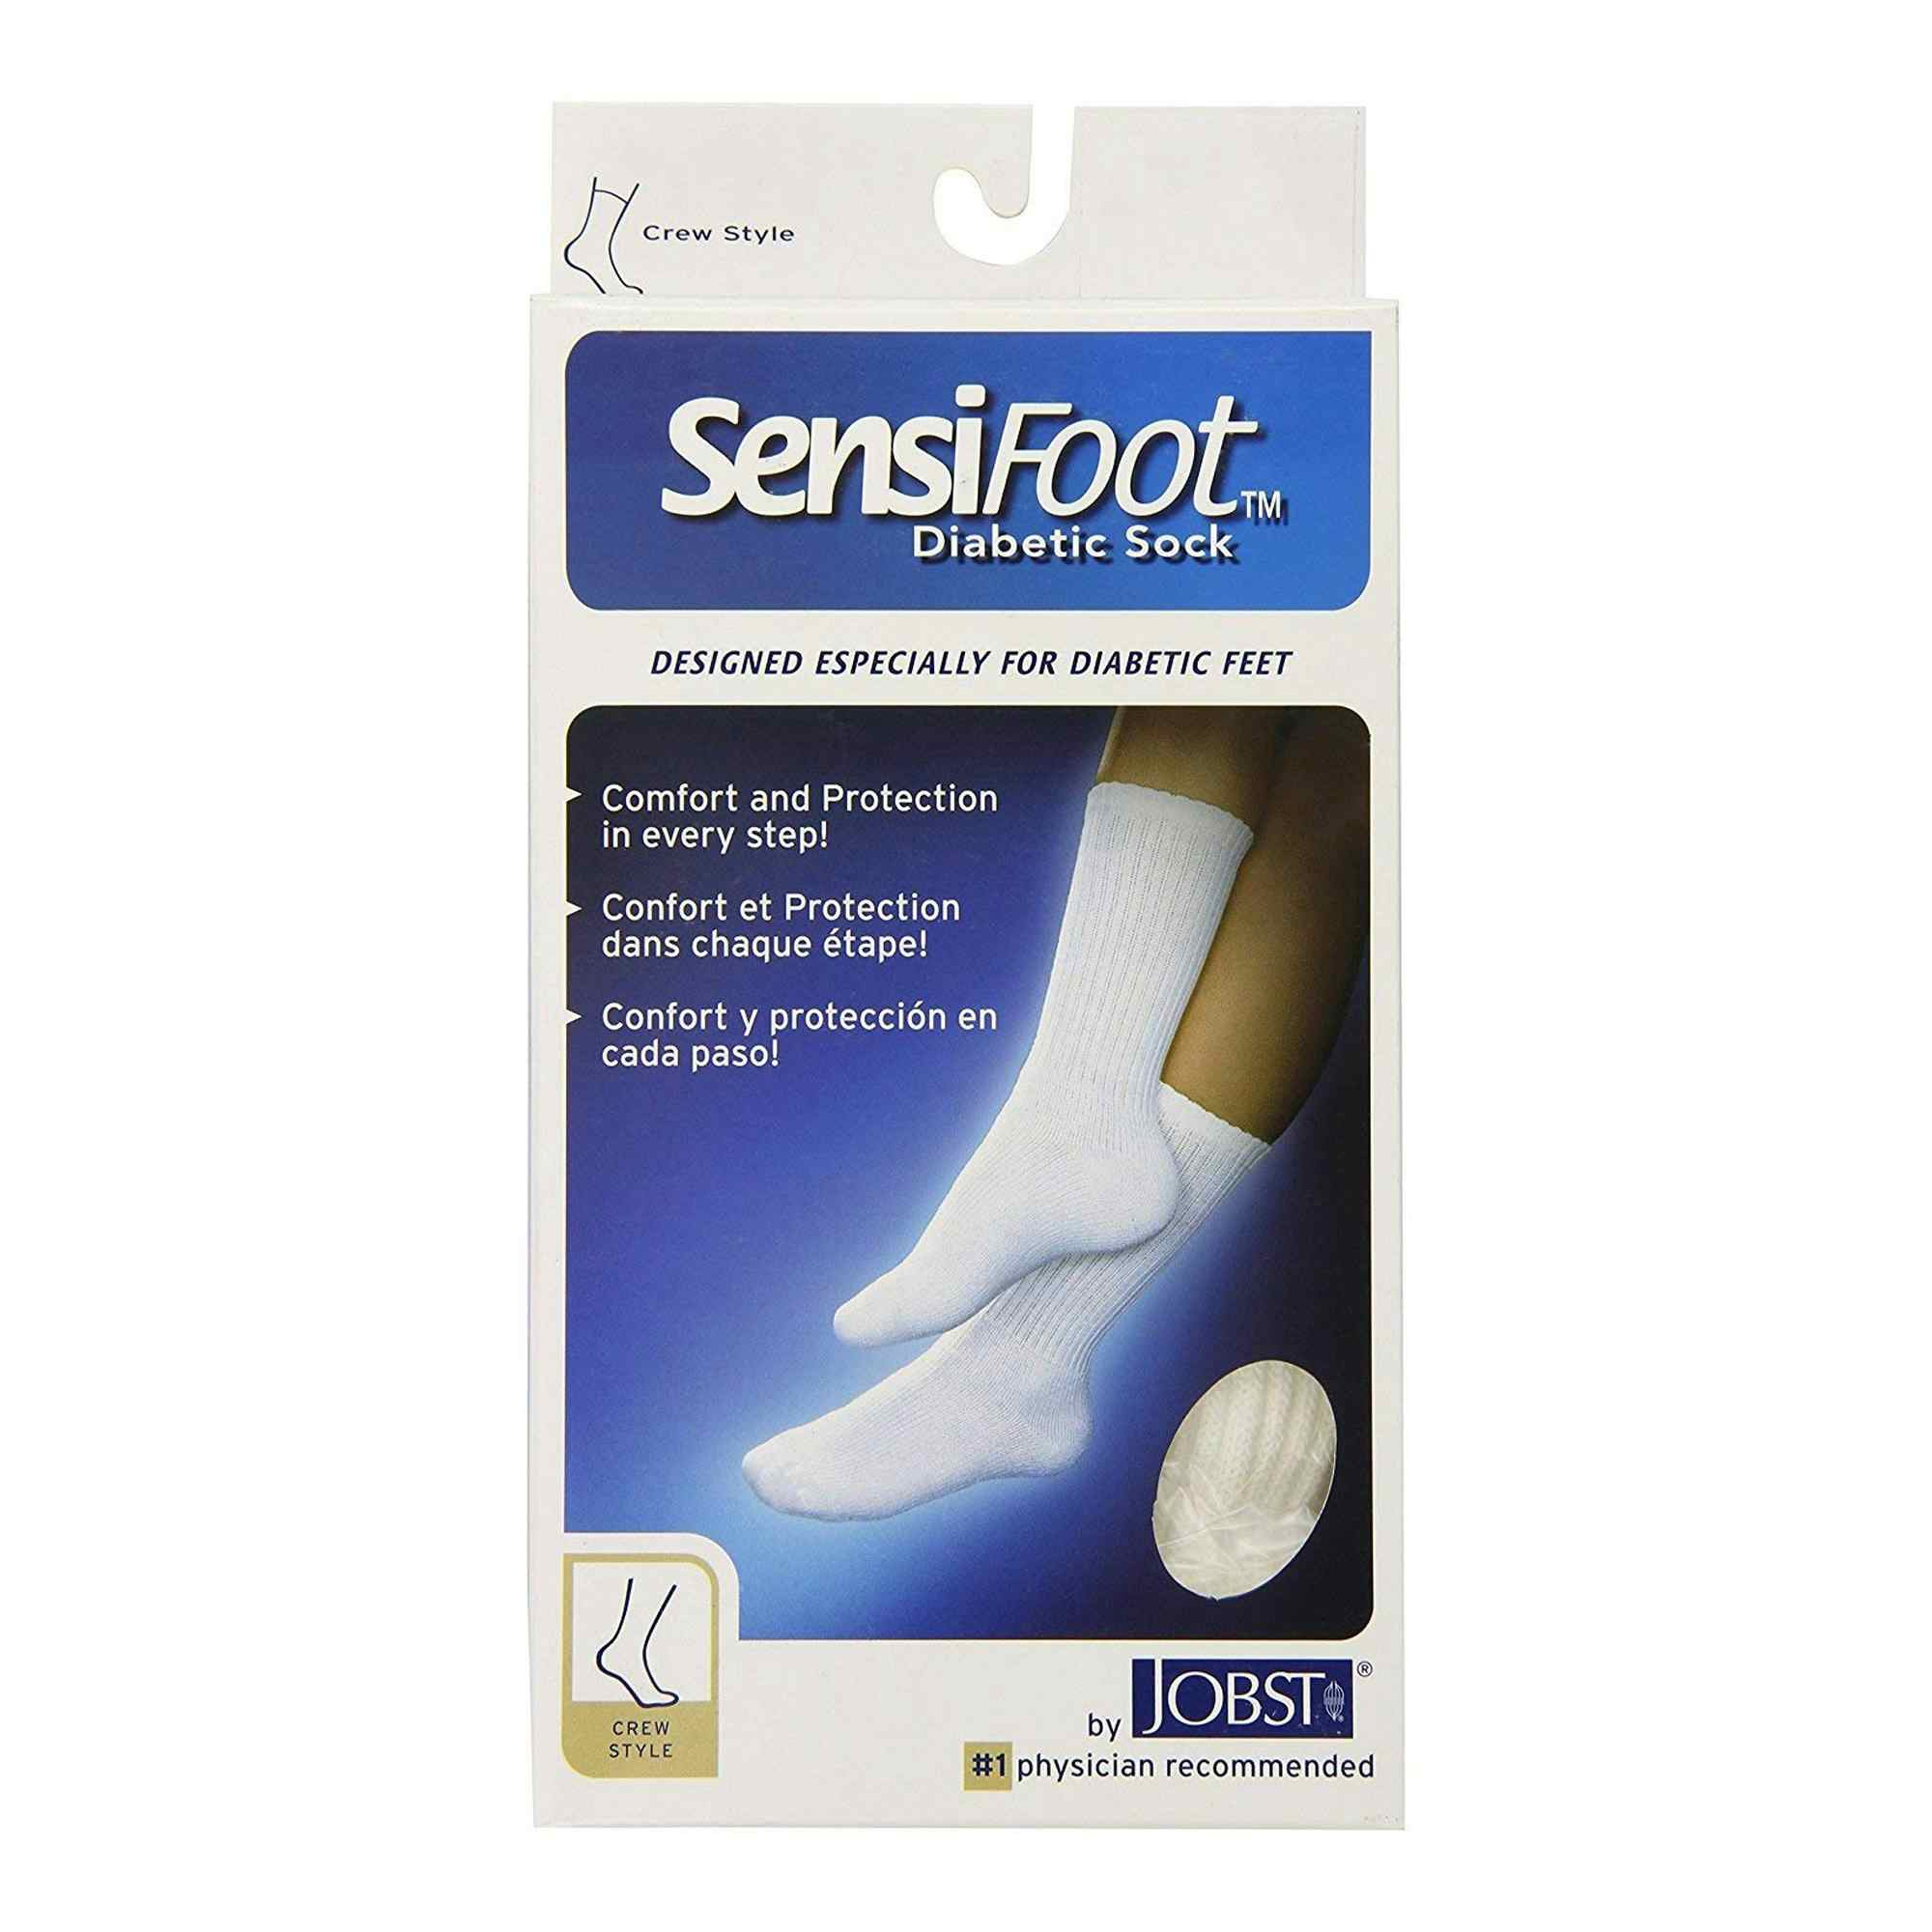 JOBST SensiFoot Diabetic Sock , 110838, White - Large - 1 Pair